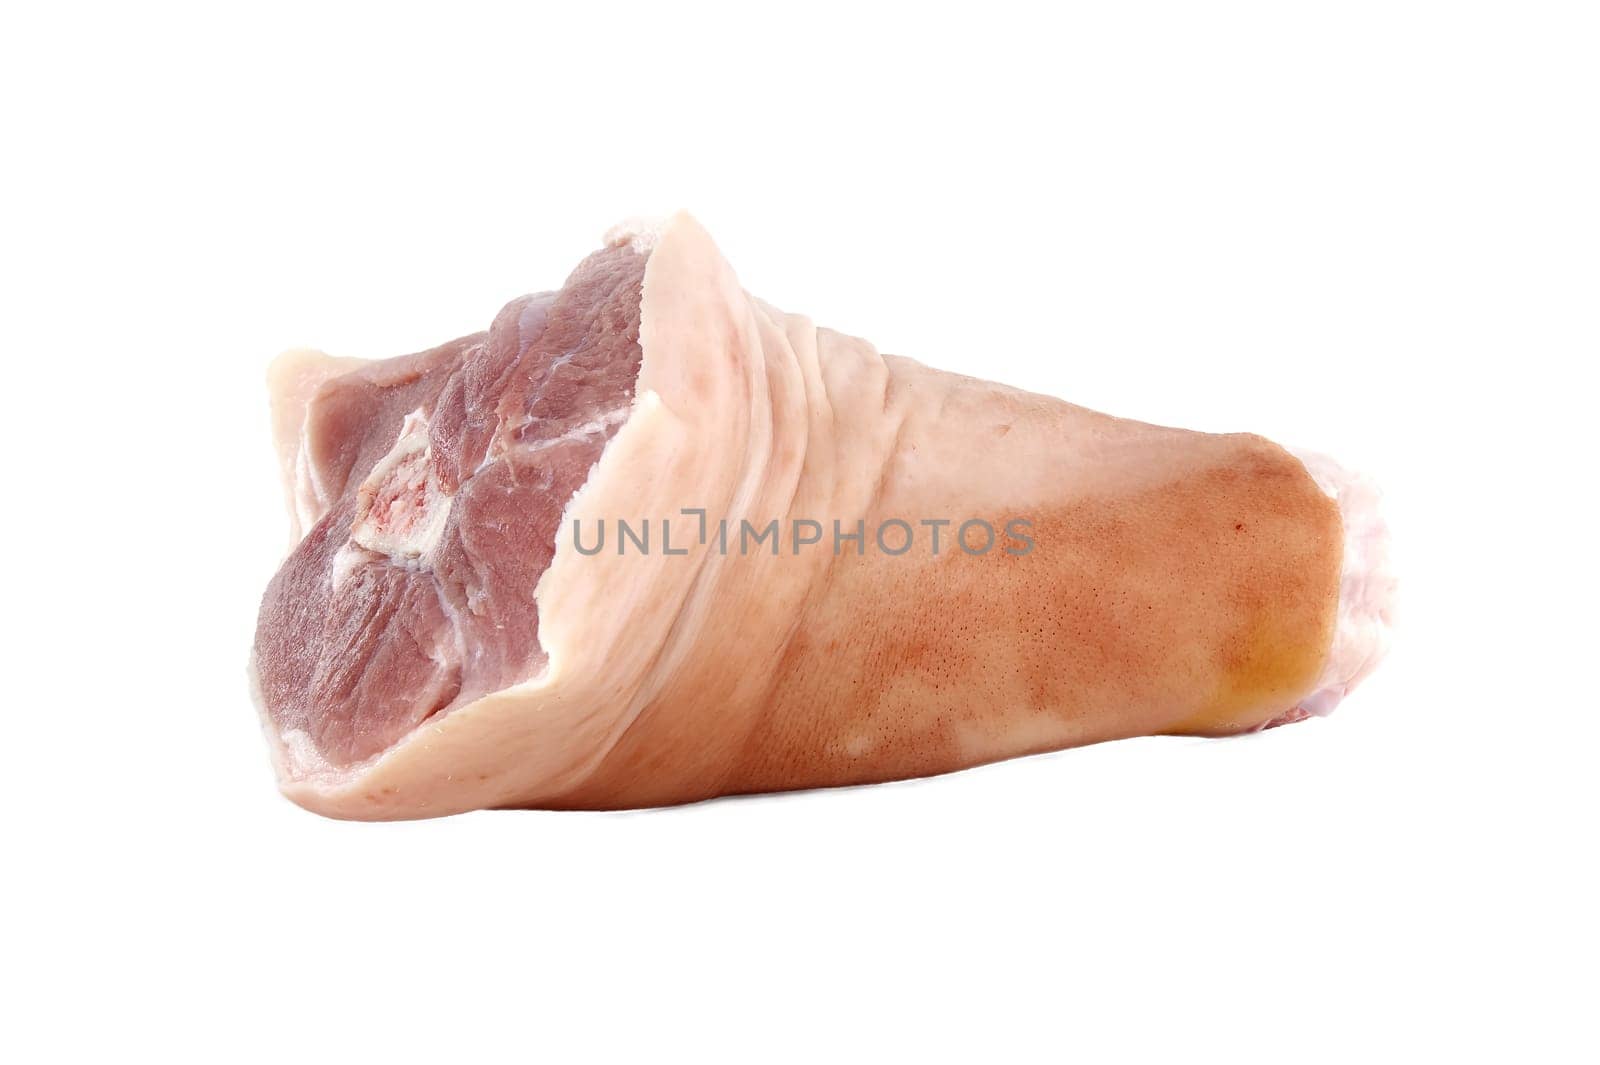 Uncooked fresh raw pork shank isolated on white background